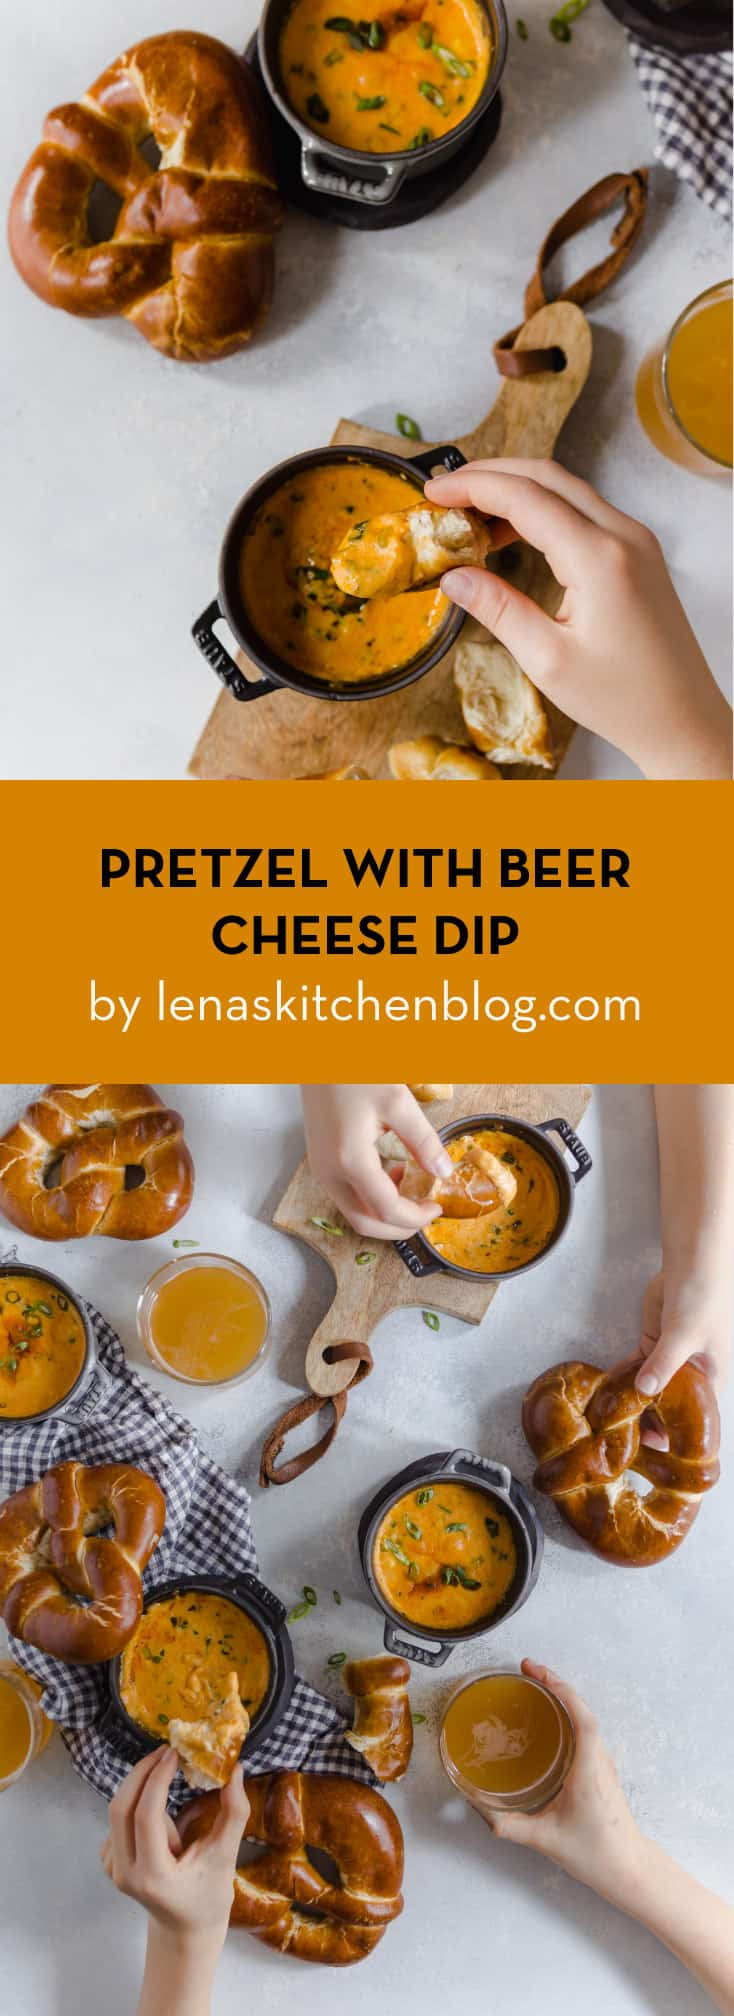 Best Beer Cheese Dip For Pretzels
 PRETZELS WITH BEER CHEESE DIP Lenaskitchen